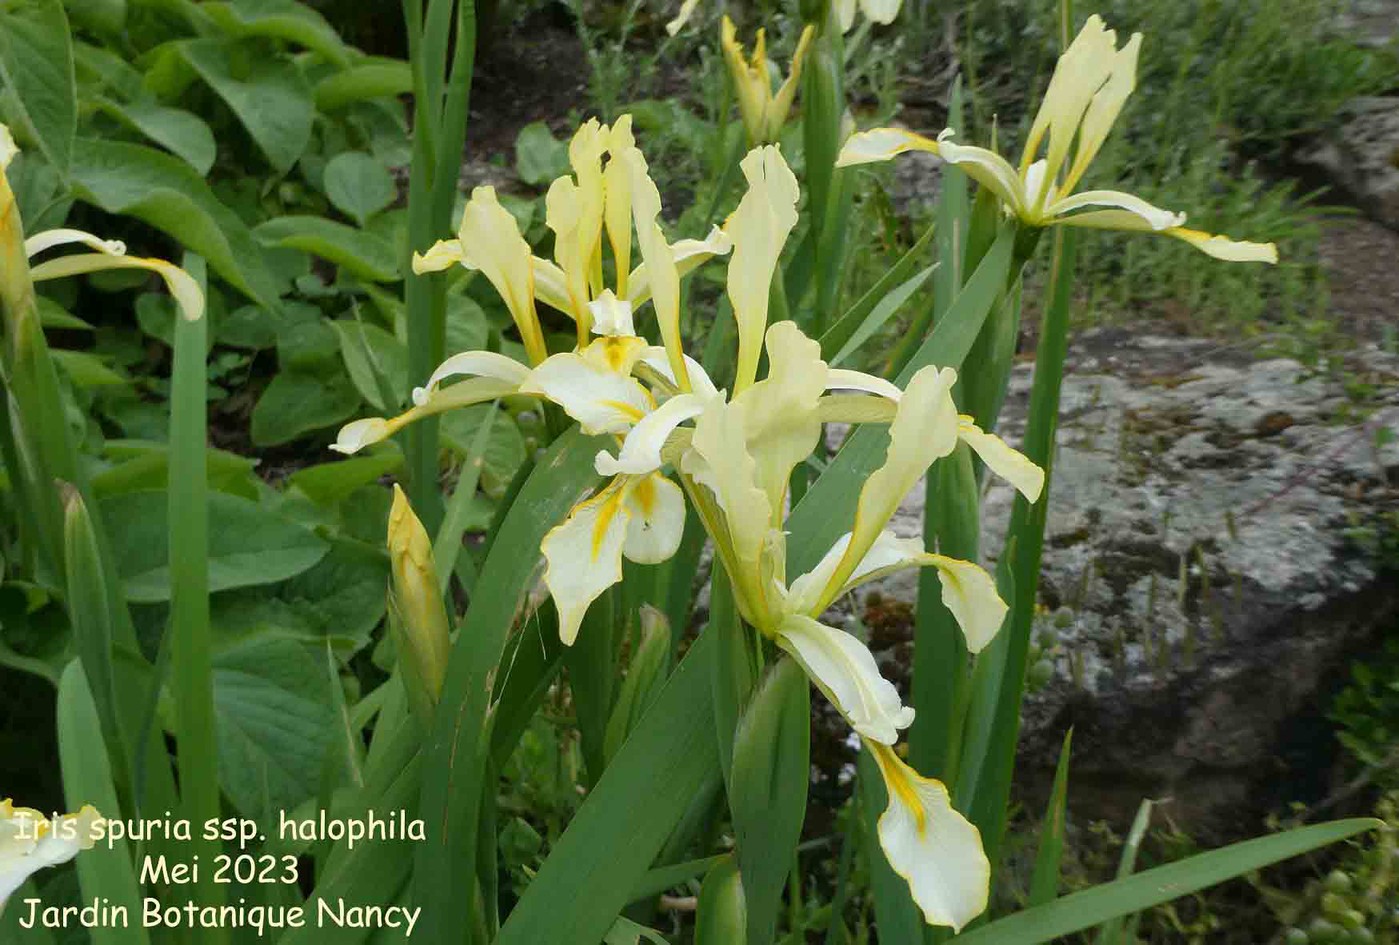 Iris spuria ssp. halophila